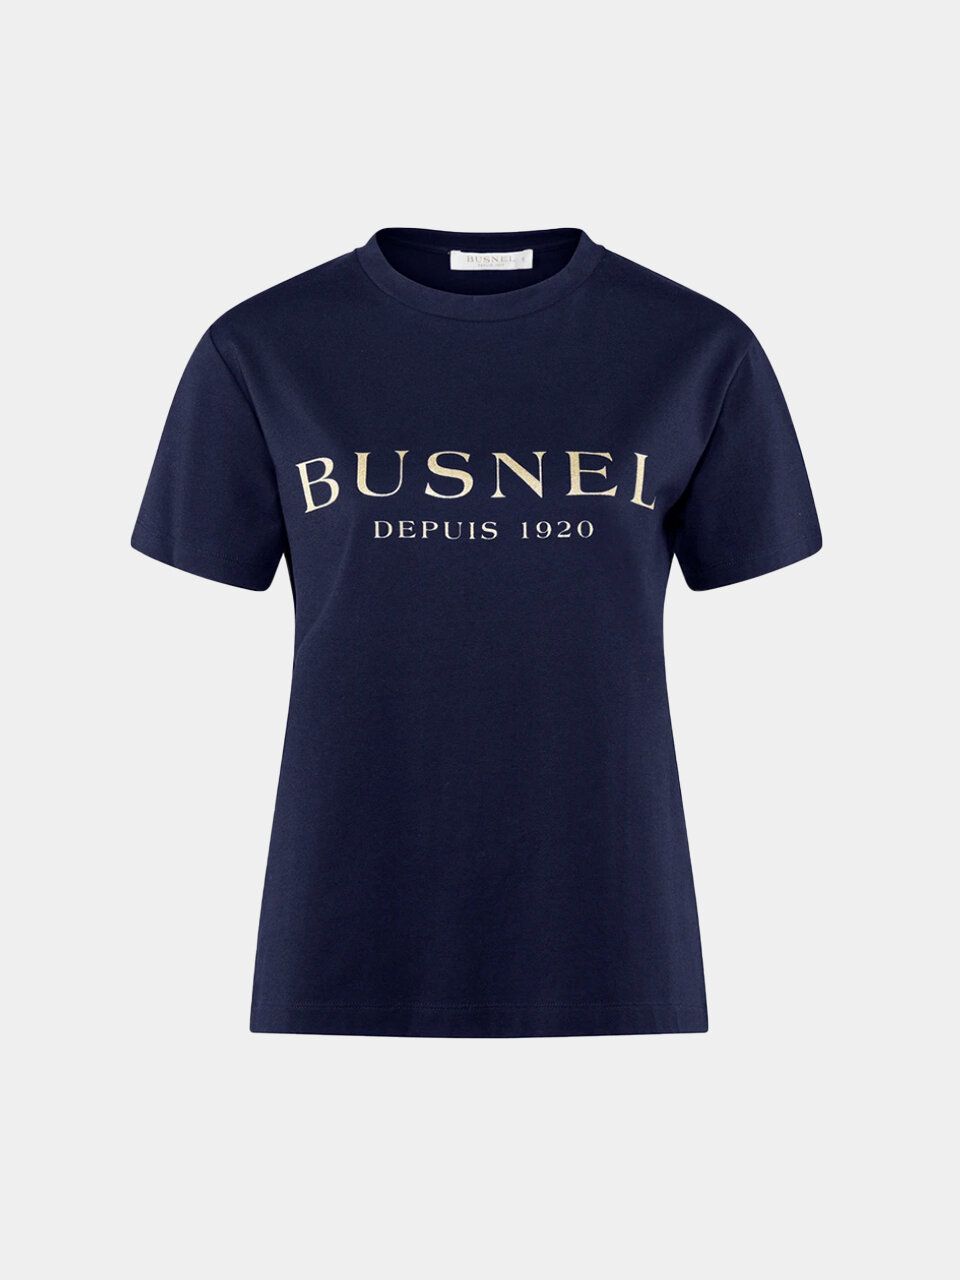 Busnel - Tourie T-Shirt